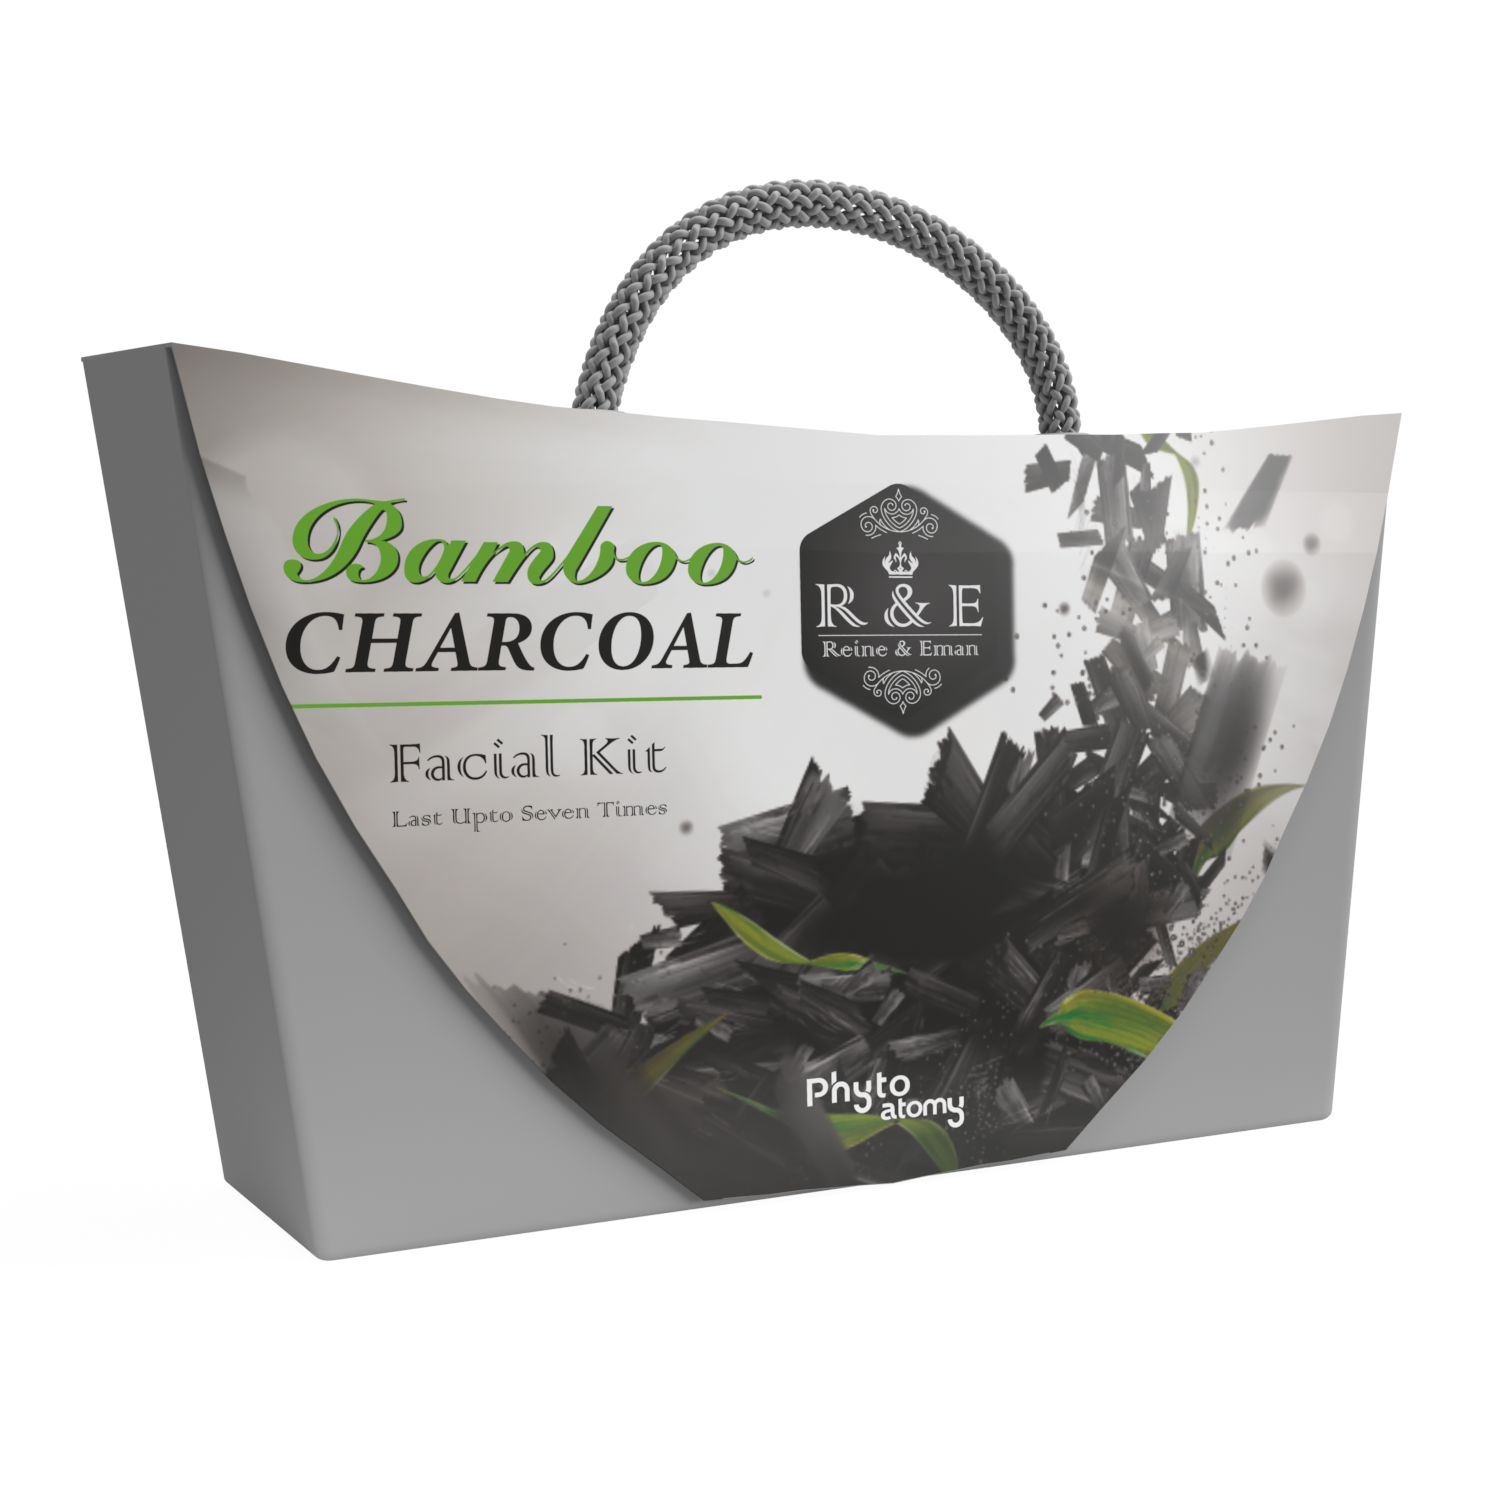 R & E Bamboo Charcoal Facial Kit